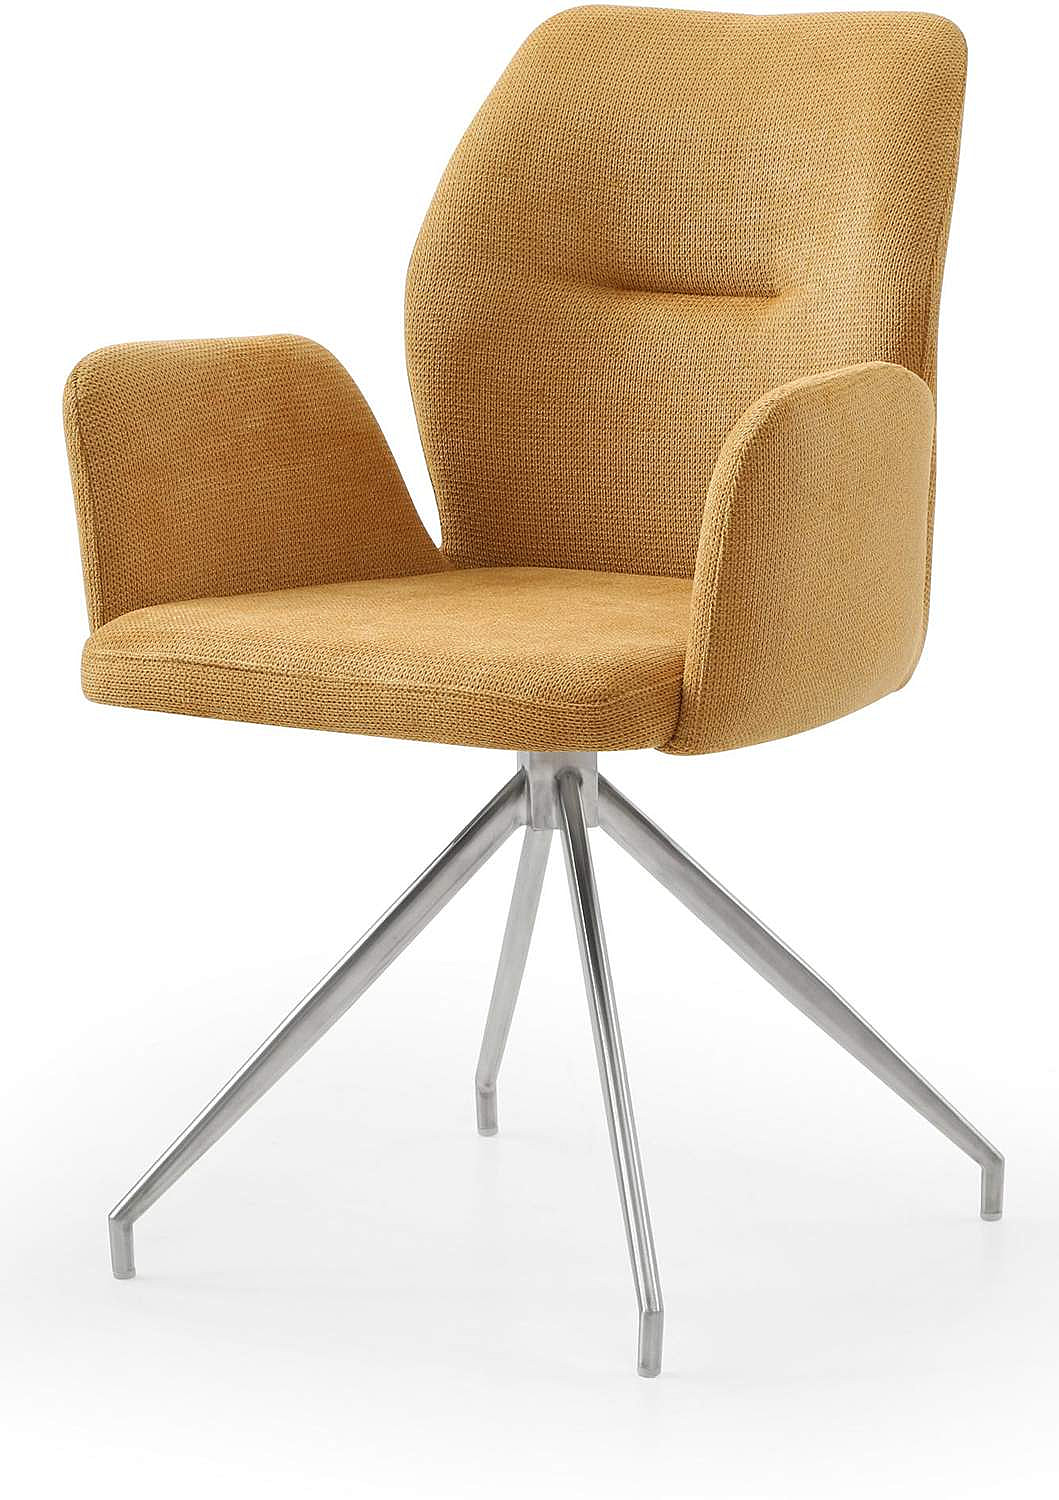 SalesFever Armlehnstuhl mit 180° Drehfunktion Gestell Edelstahl | Stühle